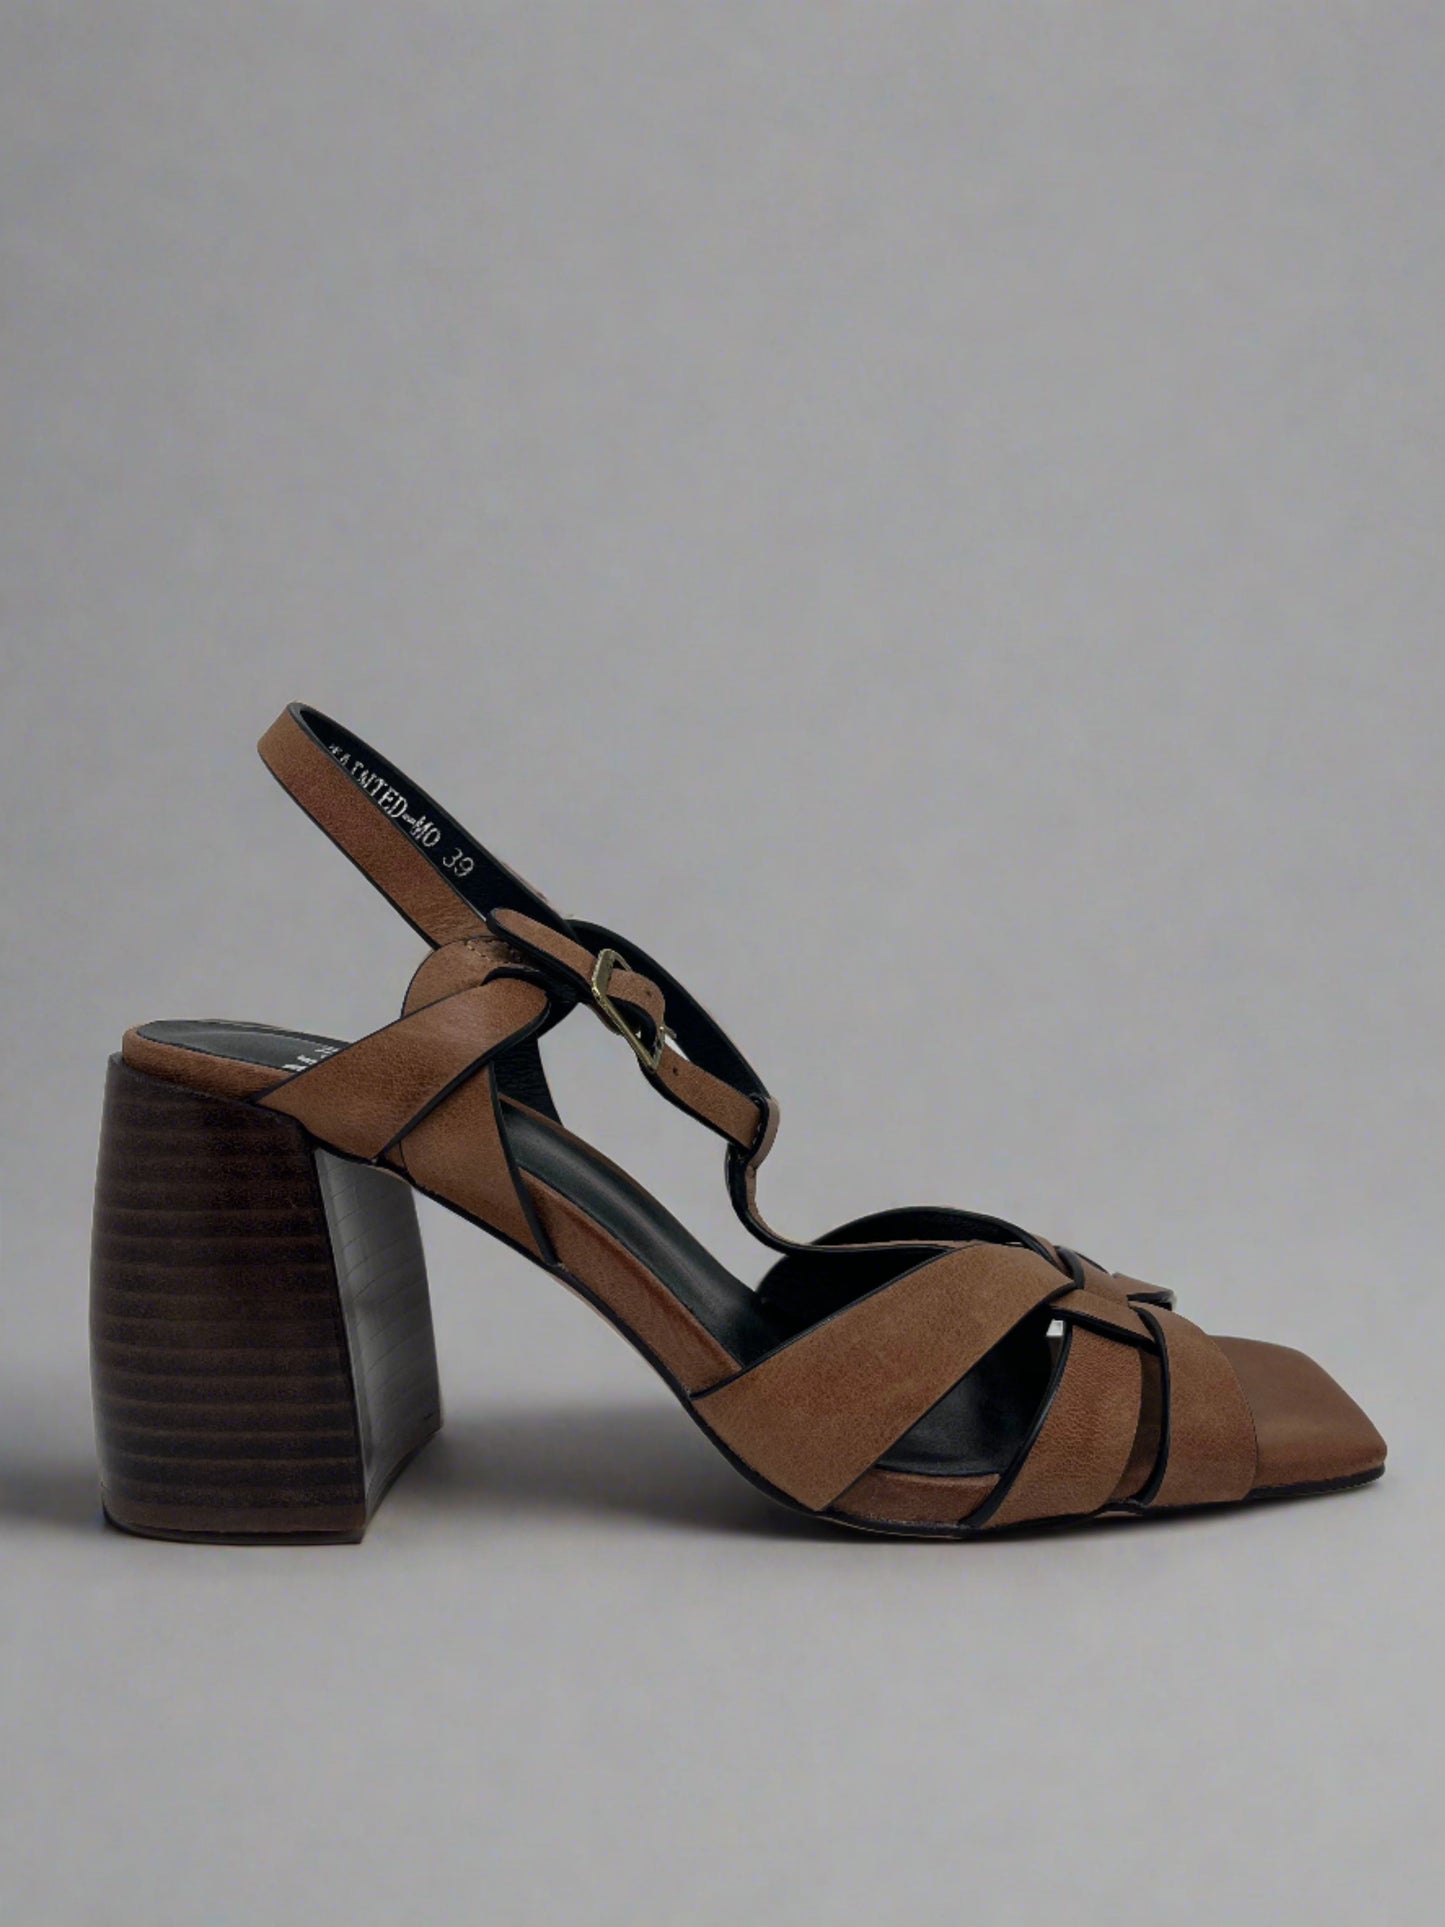 TAINTED BLOCK HEEL - MOLLINI - 36, 37, 38, 39, 40, 41, womens footwear - Stomp Shoes Darwin